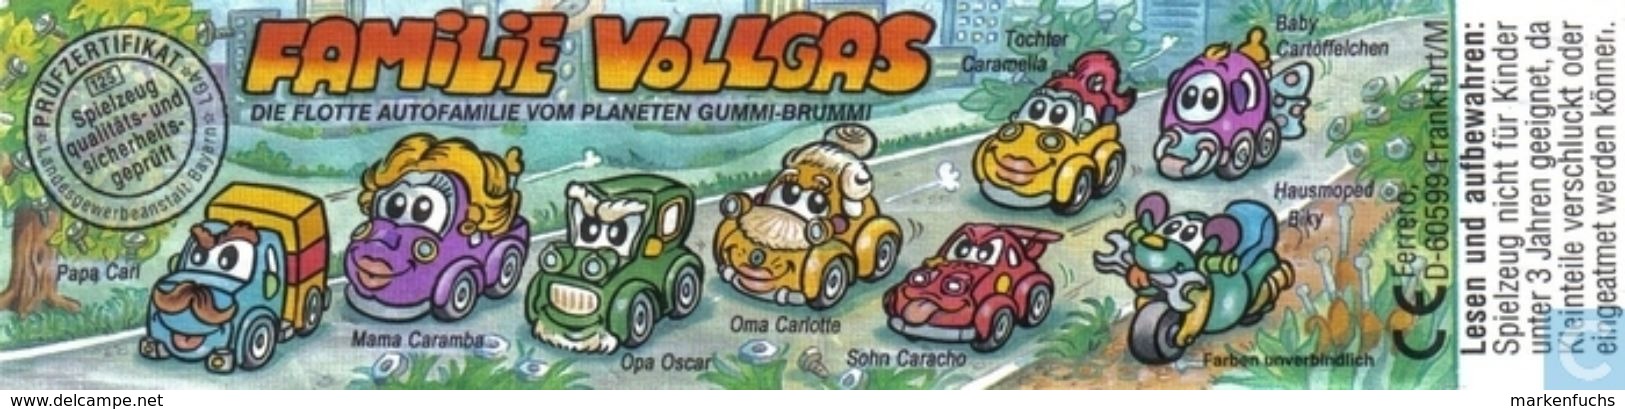 Familie Vollgas 1999 / Oma Carlotte + BPZ - Maxi (Kinder-)